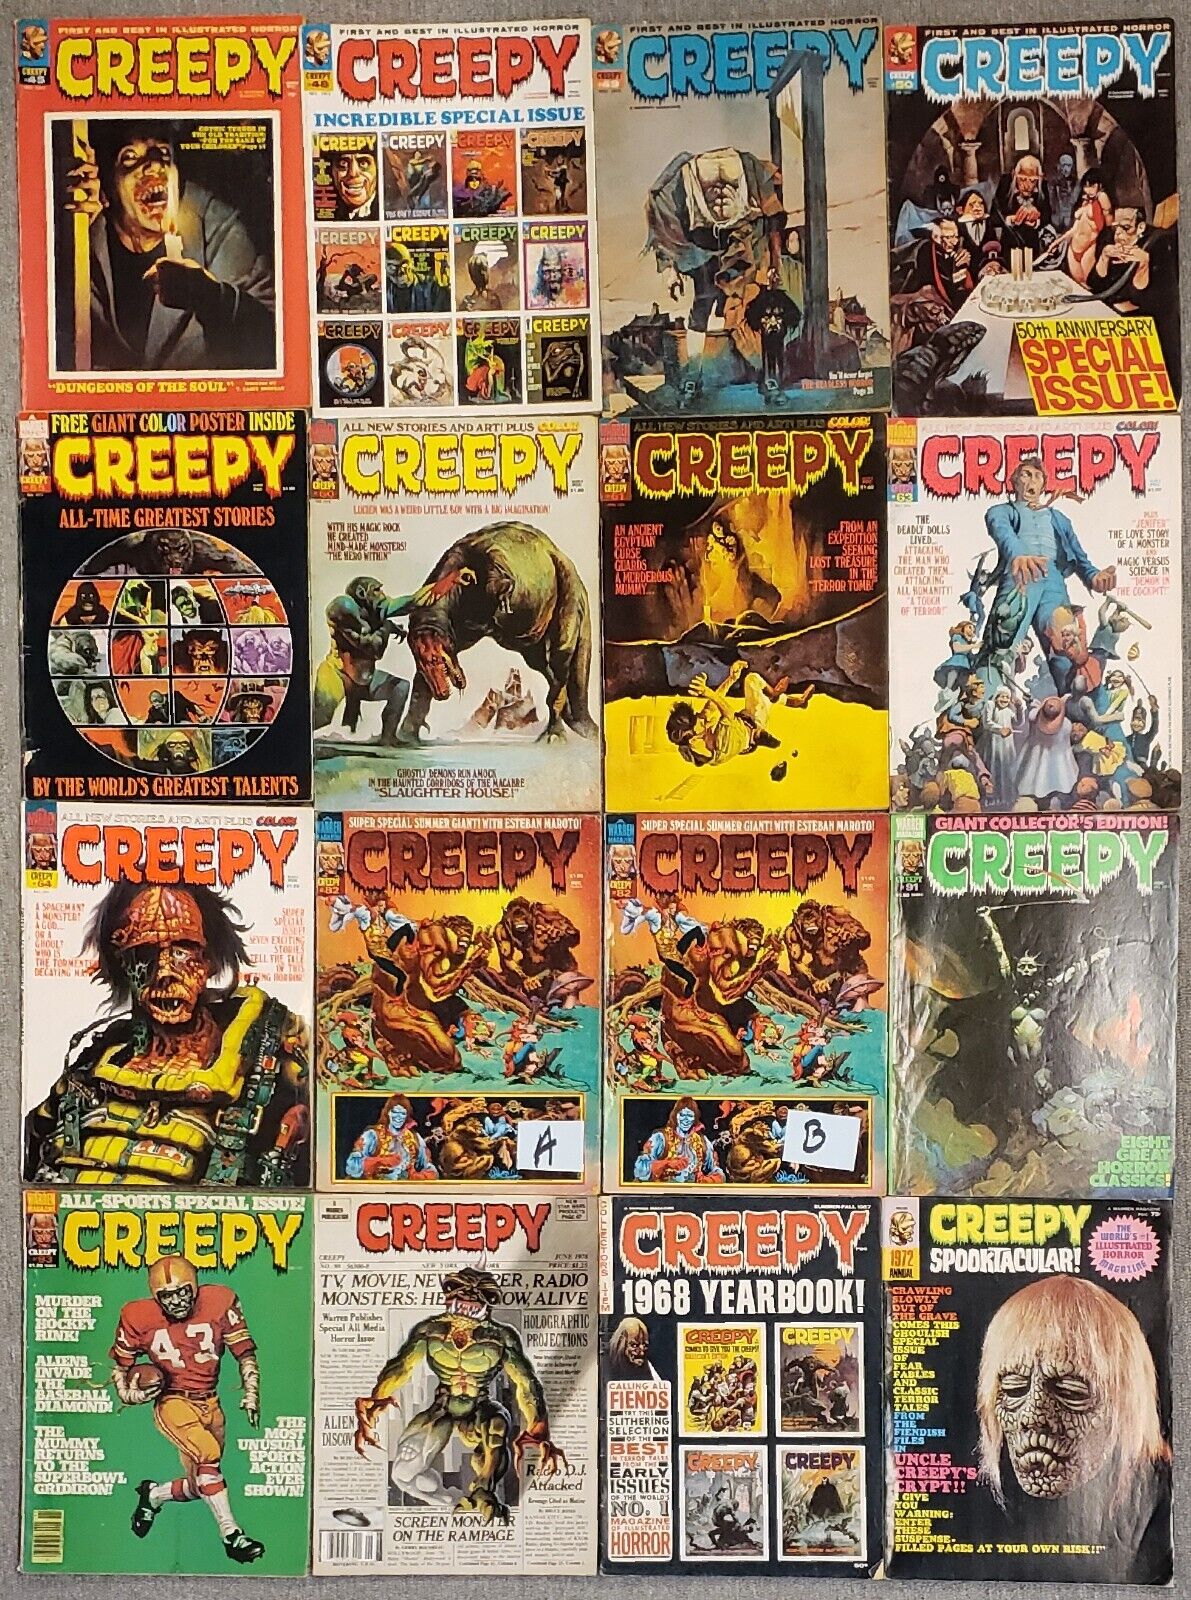 Vintage Collectible Creepy Comics, $30‐$45 each, Good to Very Good Condition.